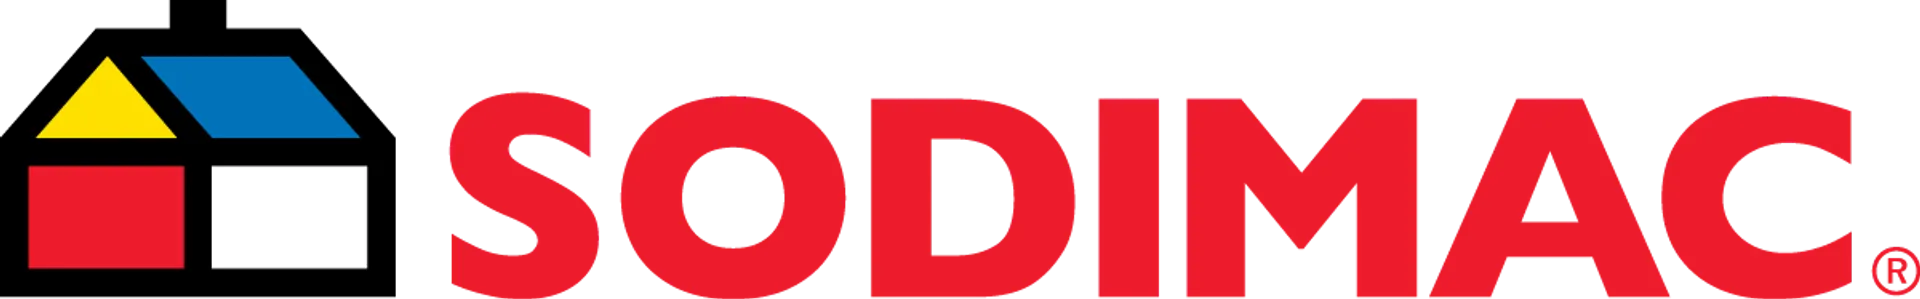 Logo de Sodimac